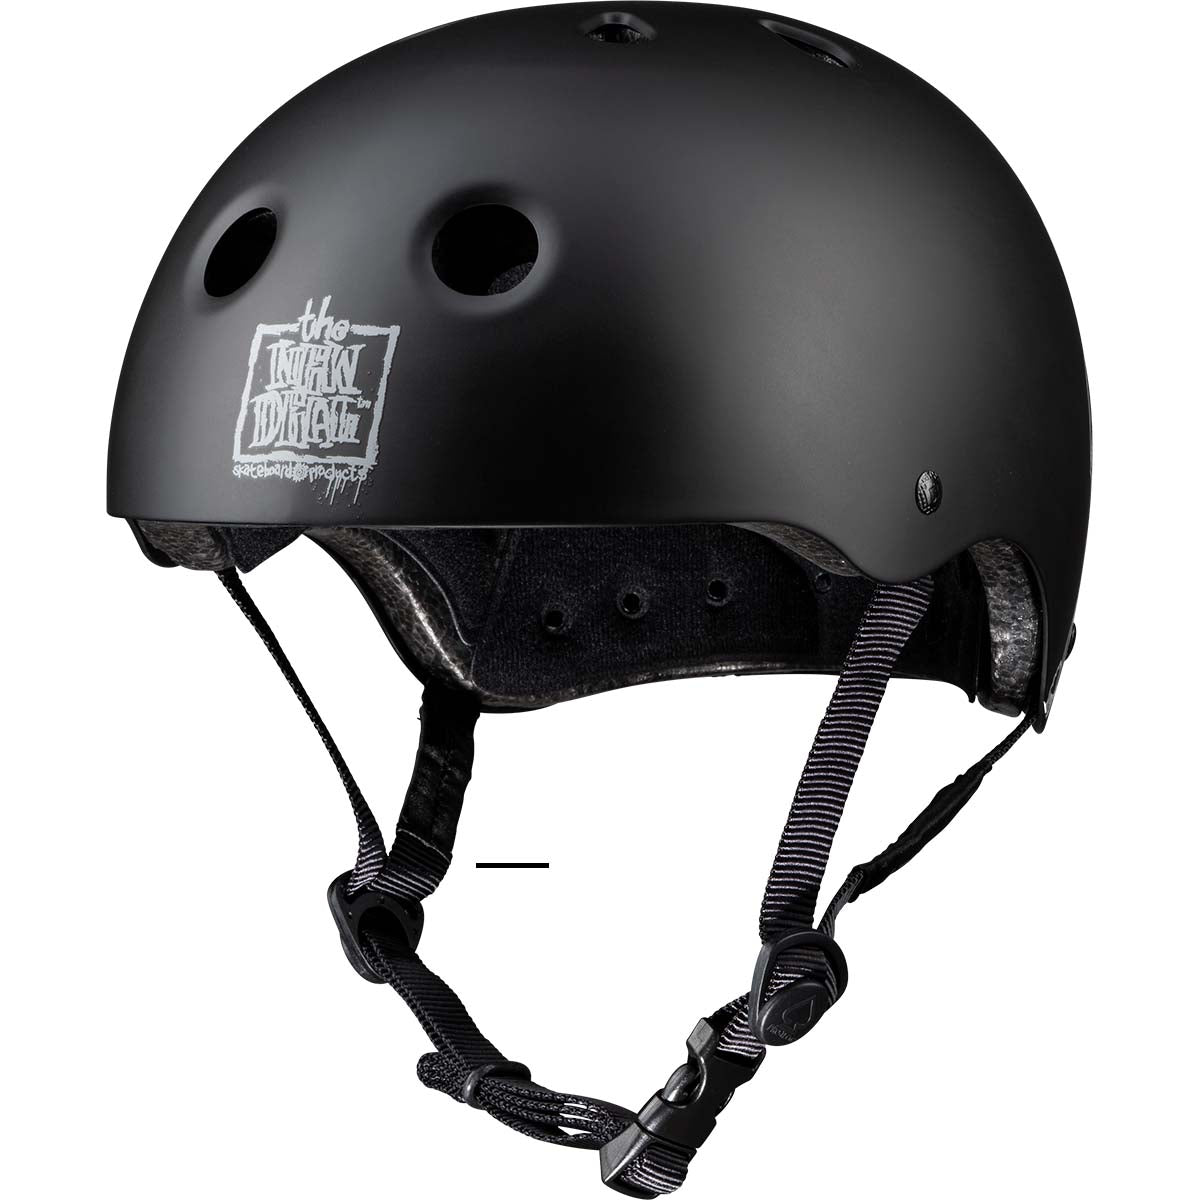 Pro-Tec x New Deal Spray Classic Certified Helmet - Black image 1